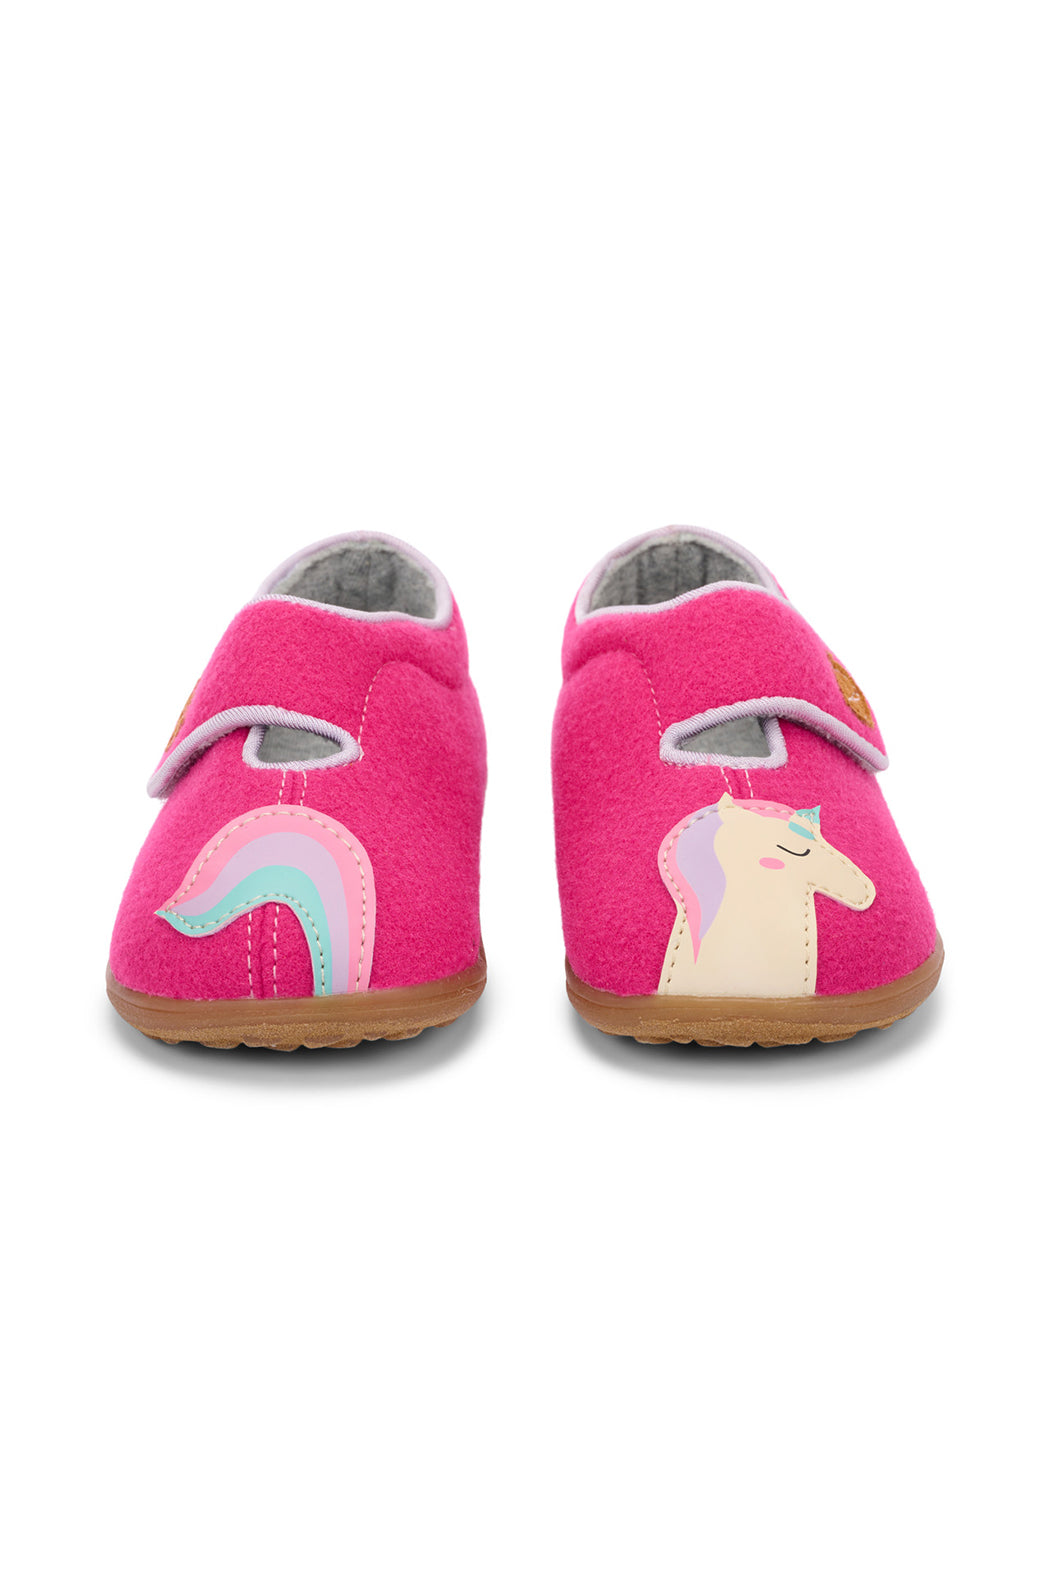 See Kai Run Cruz Slipper Shoes - Pink Unicorn